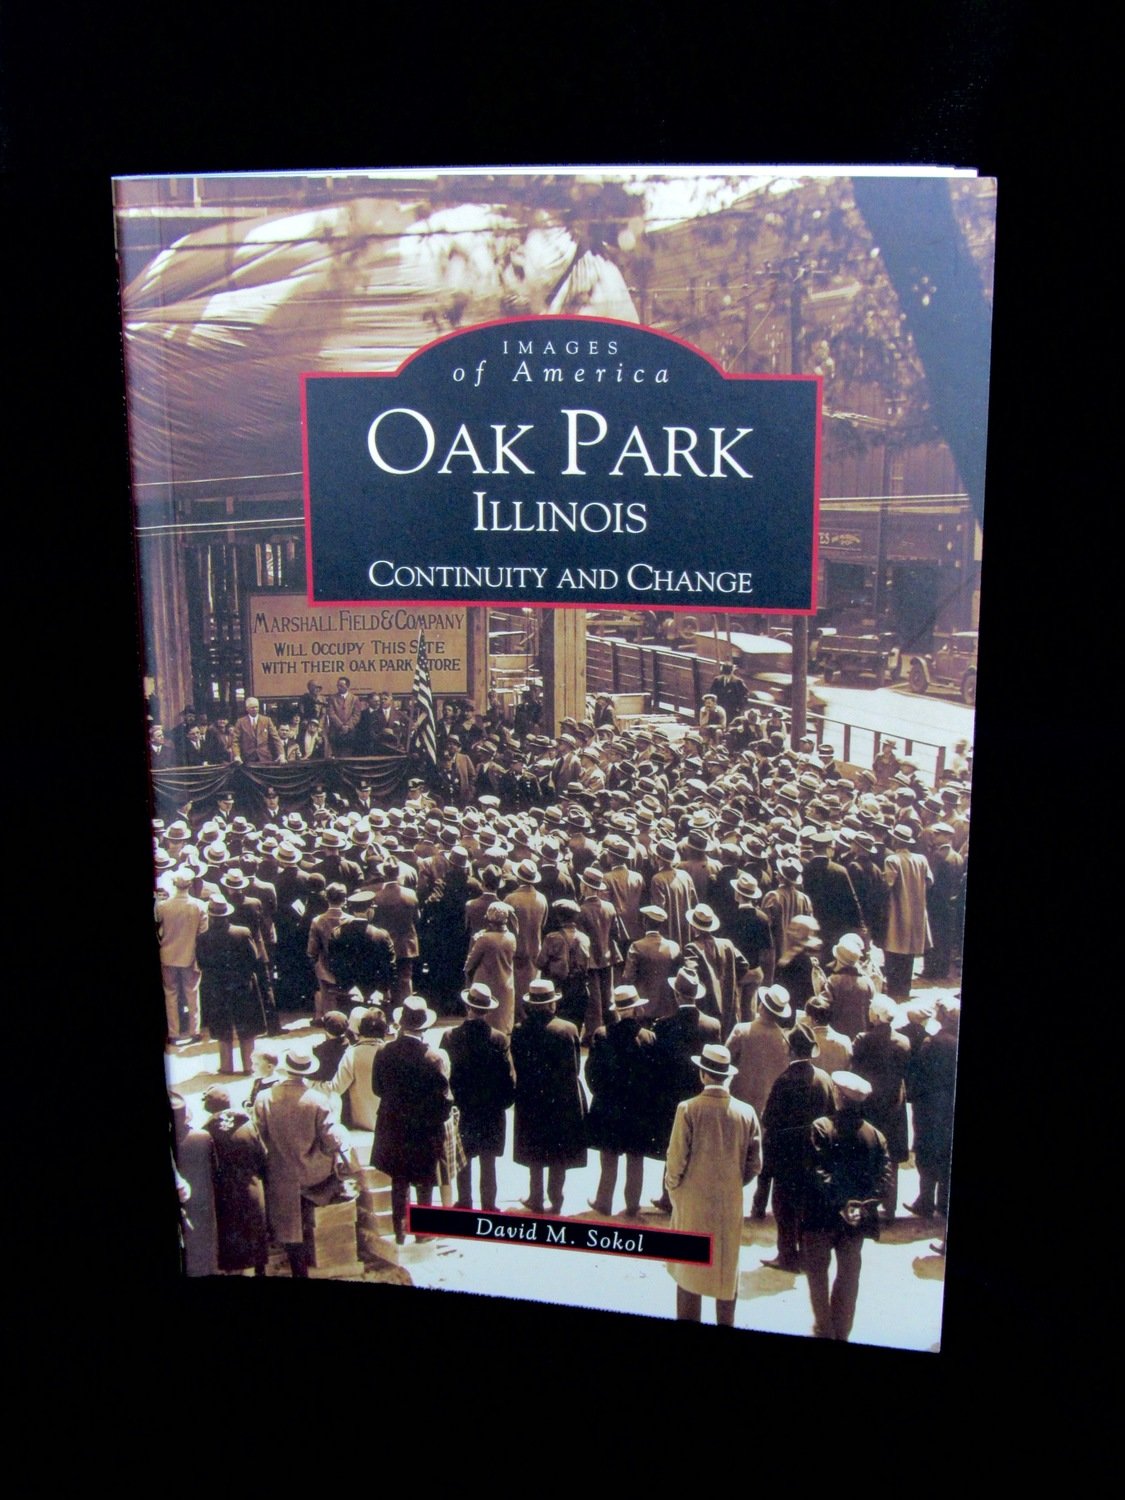 Oak Park Illinois: Continuity and Change